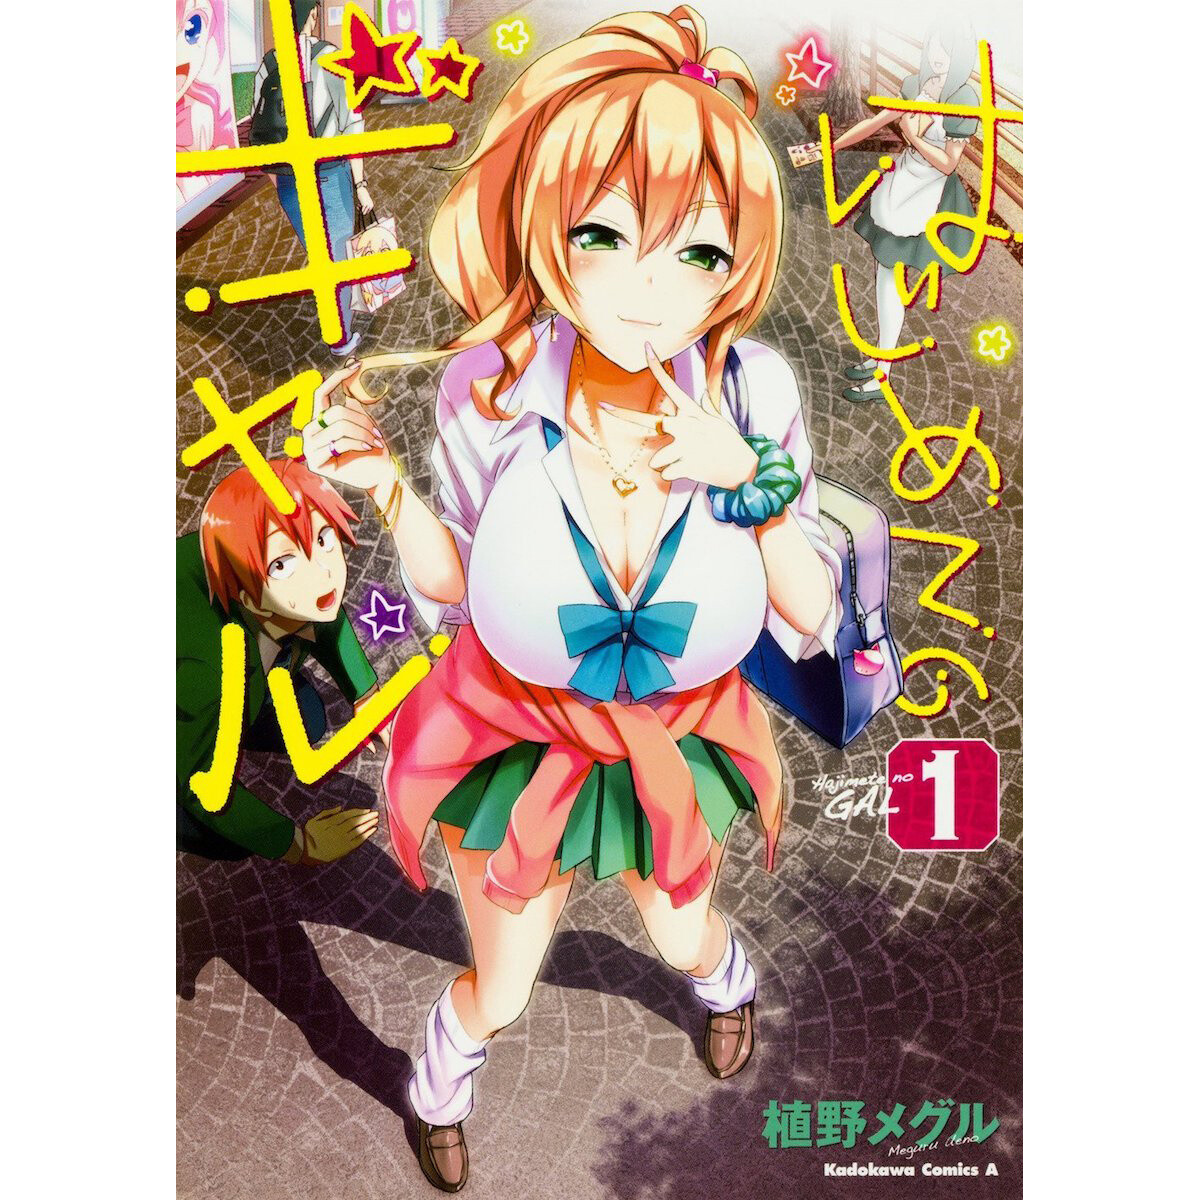 Hajimete manga